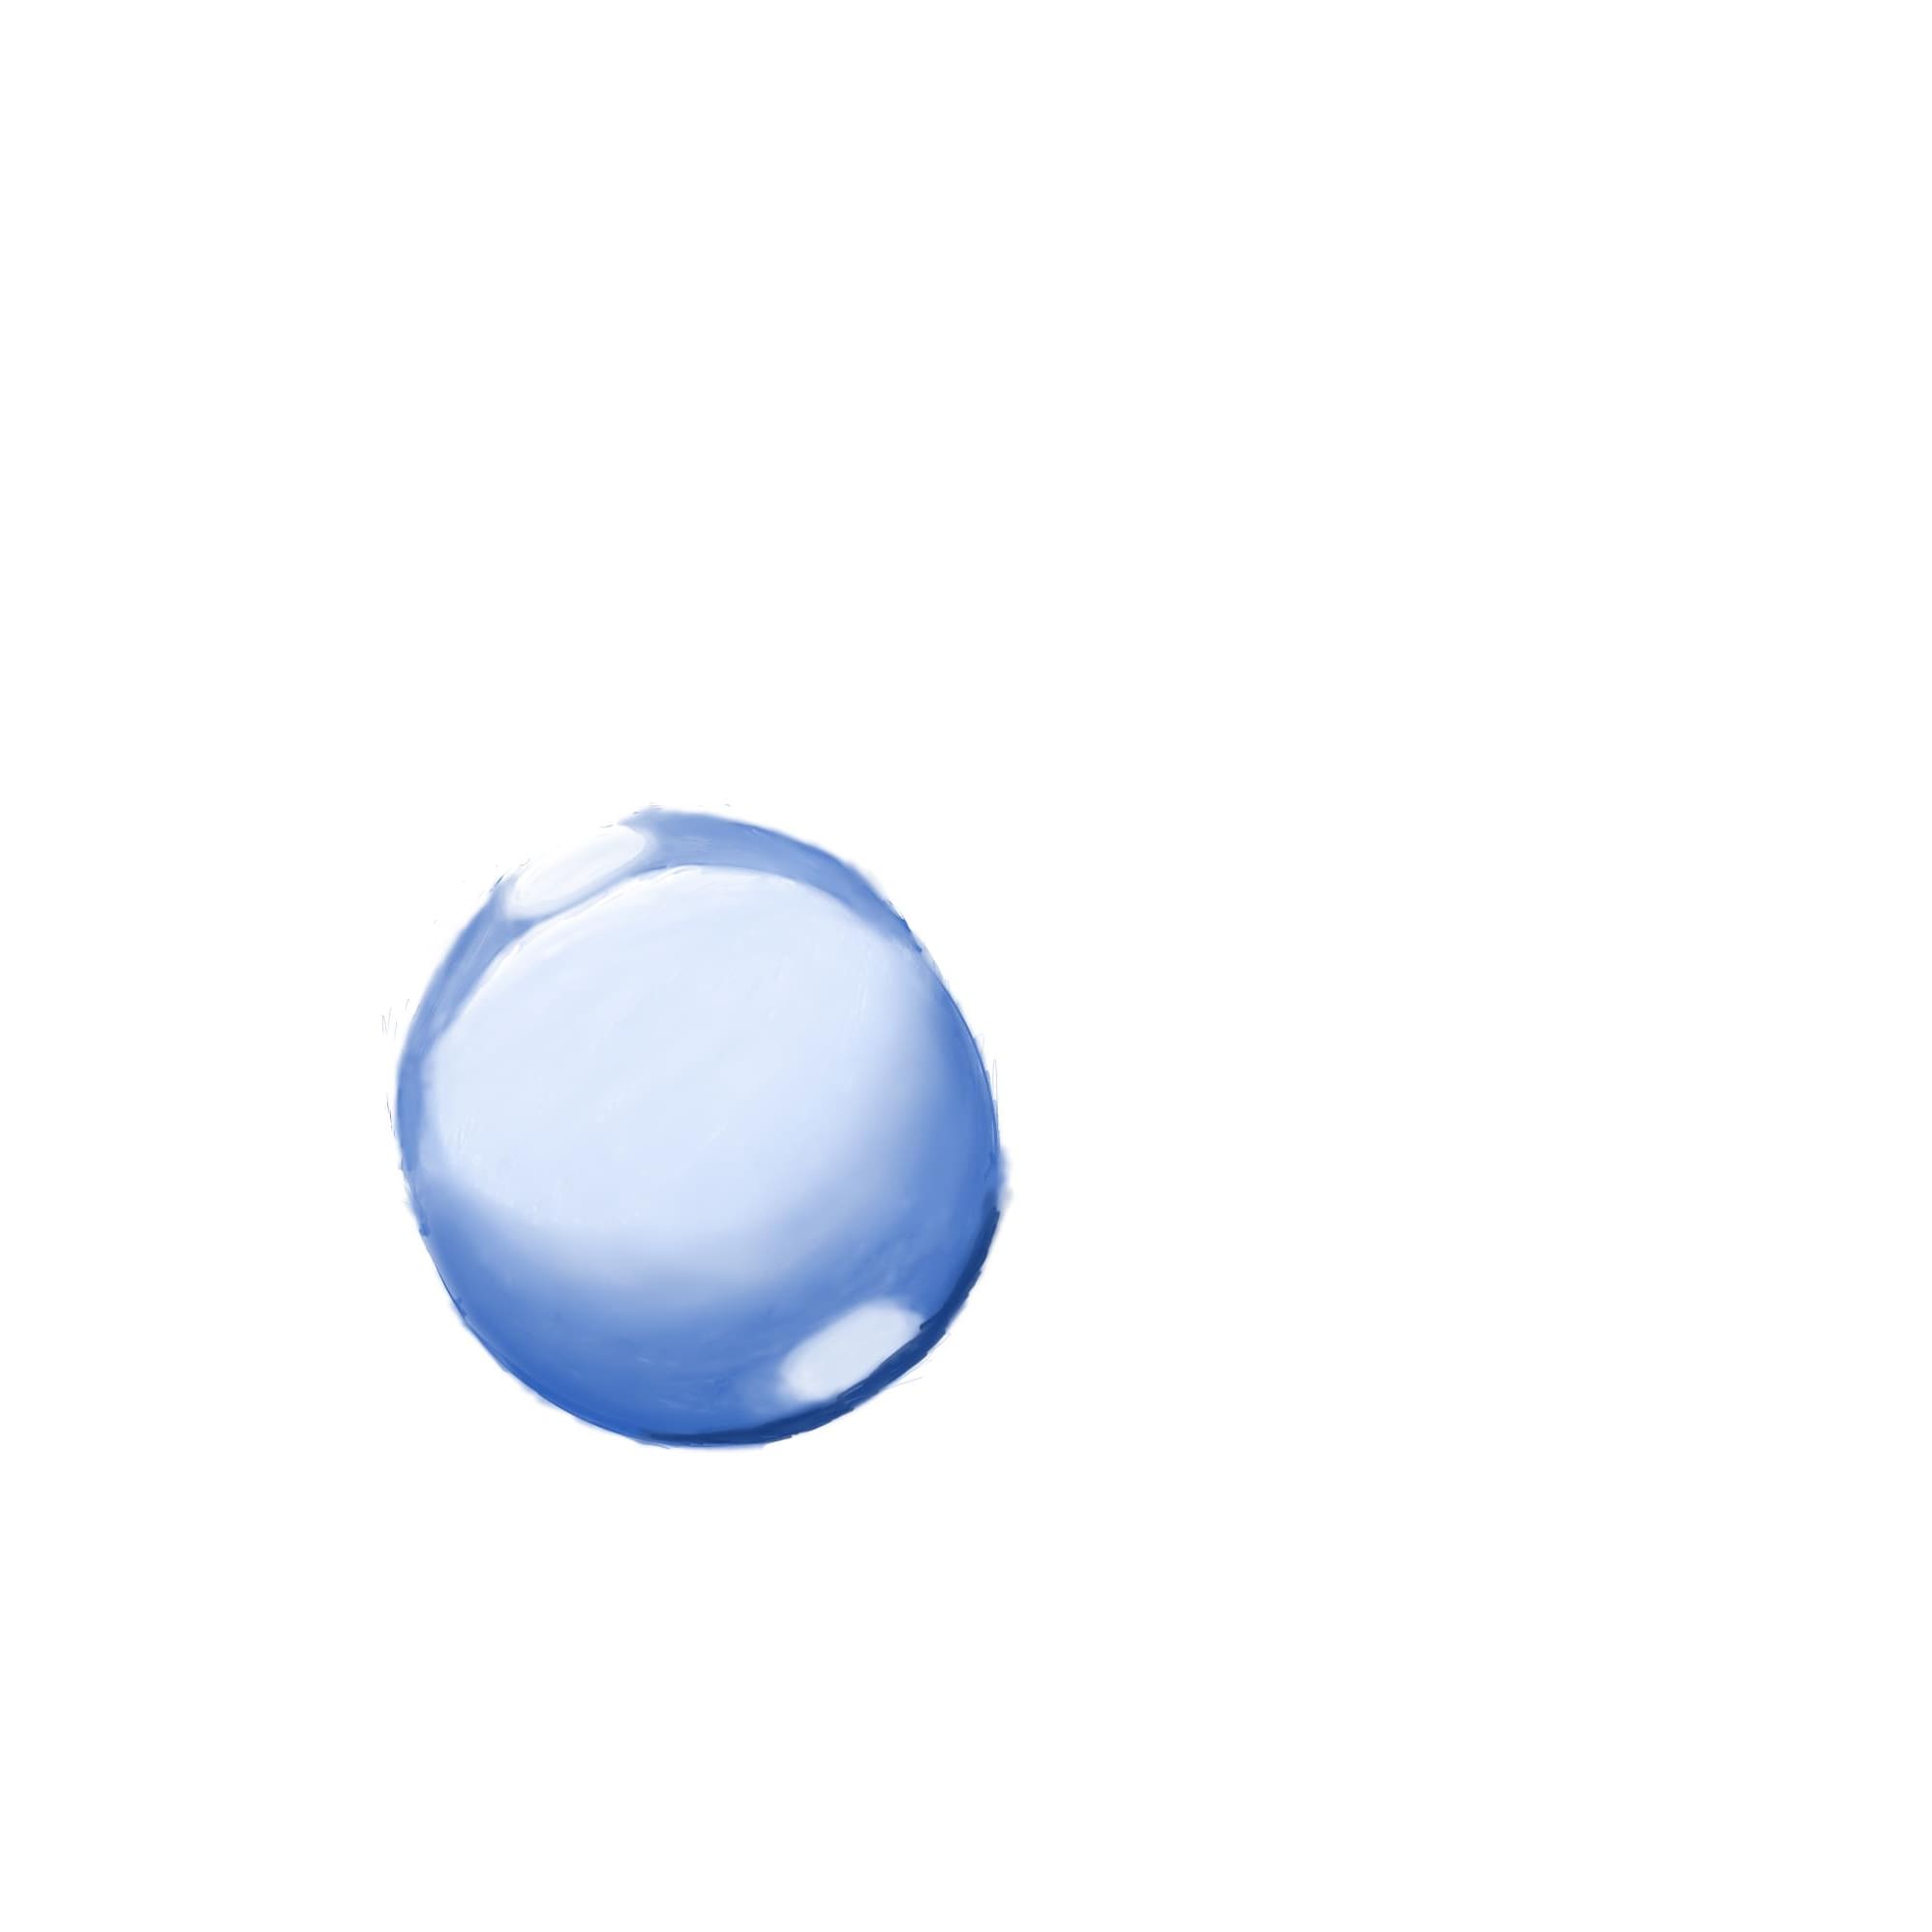 Water Droplet 001